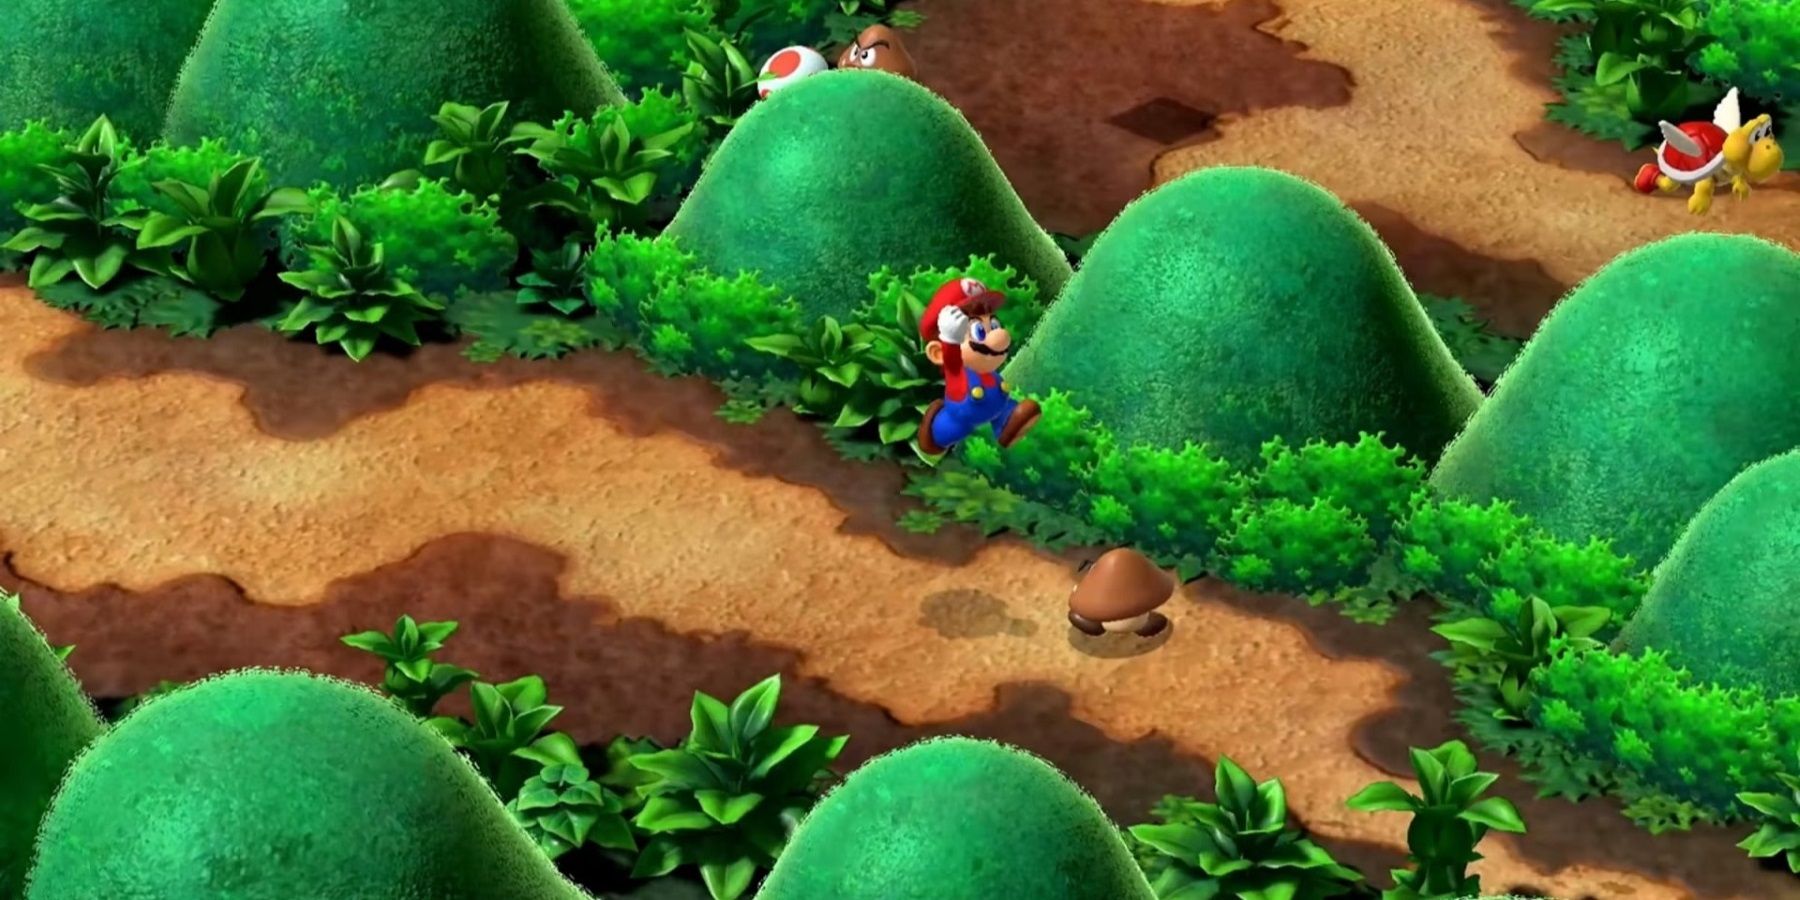 TOP 10 Most viewed Super Mario RPG videos on  2005-2023 